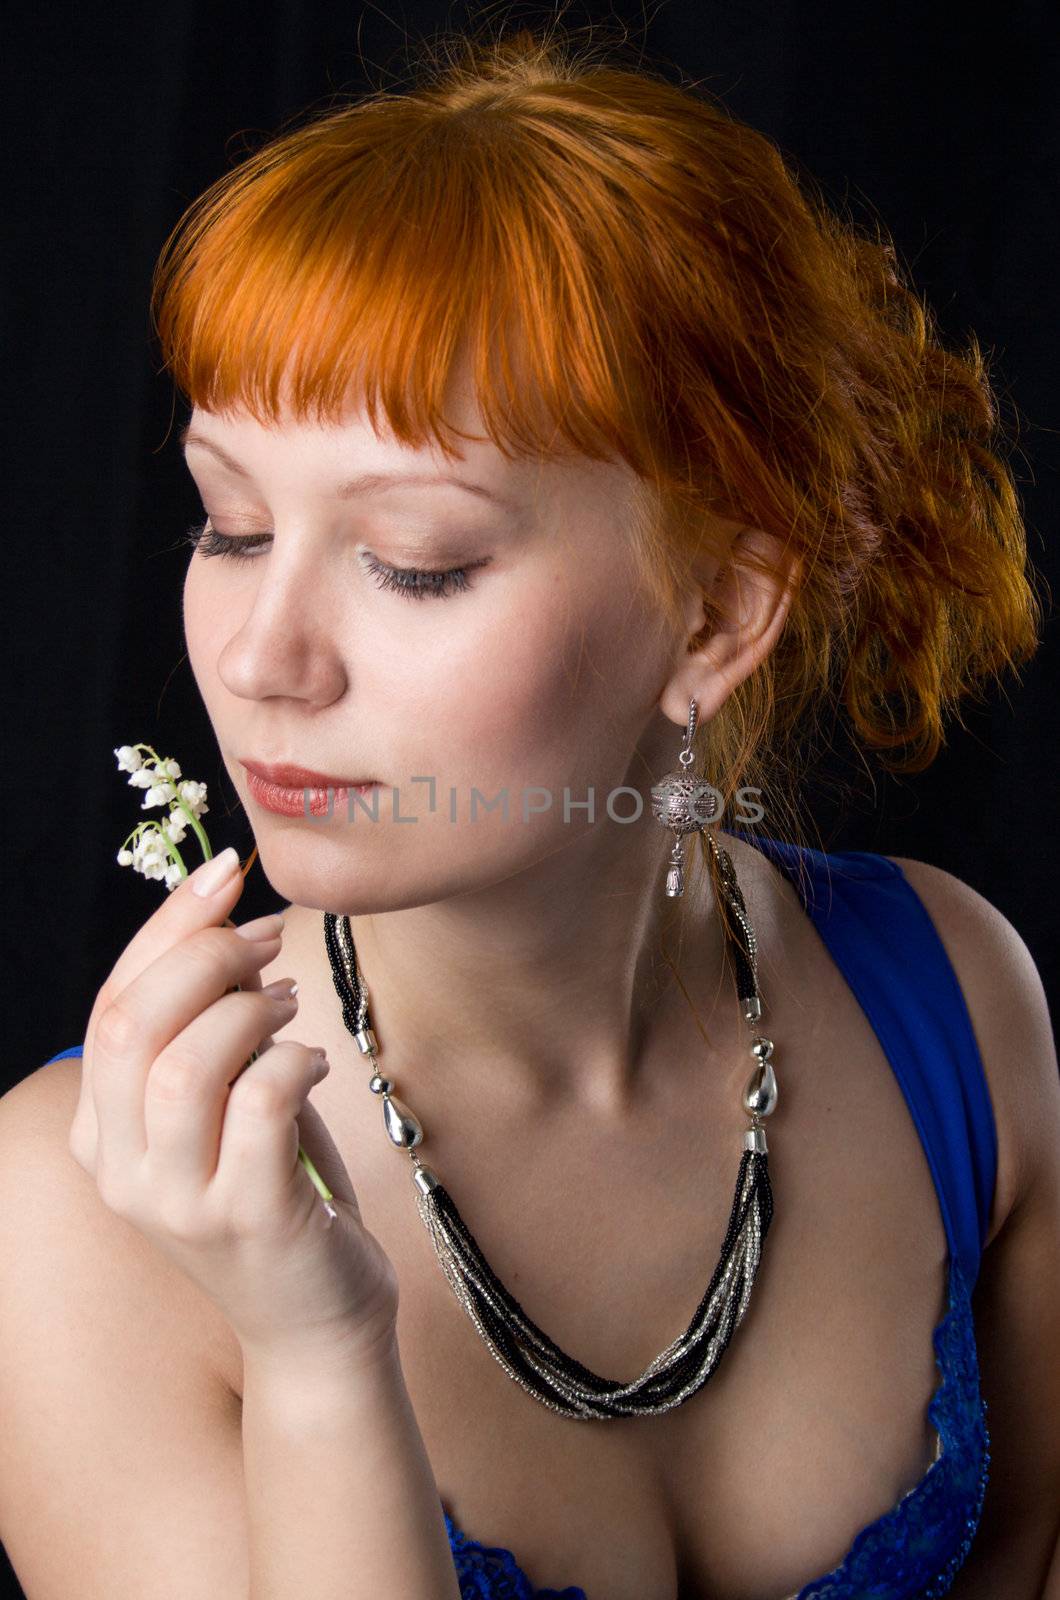 Beautiful lady smelling flowers by Gdolgikh